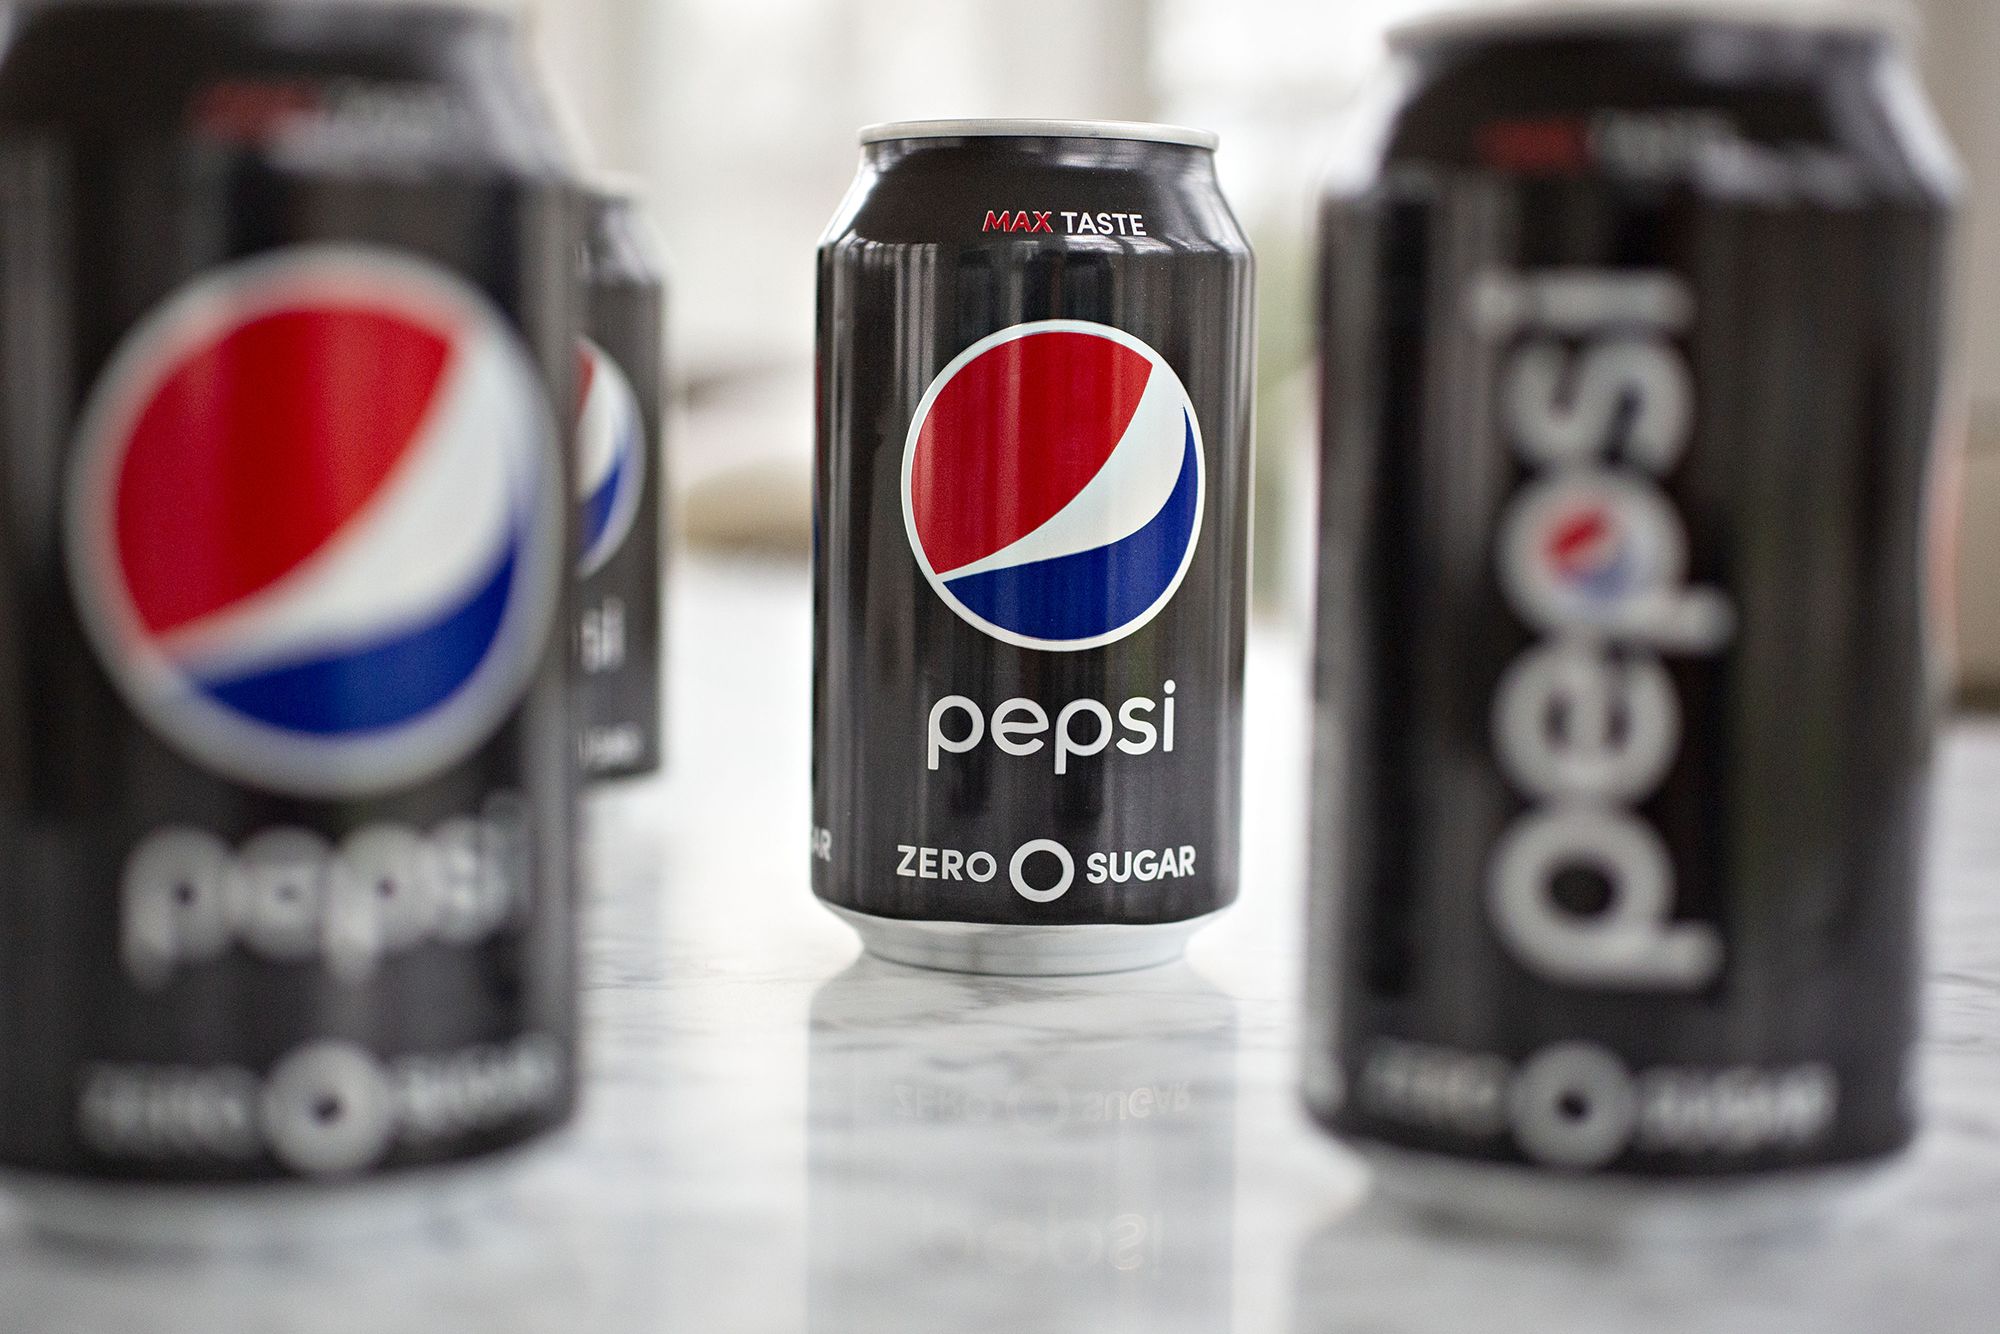 Pepsi is changing its Zero Sugar recipe